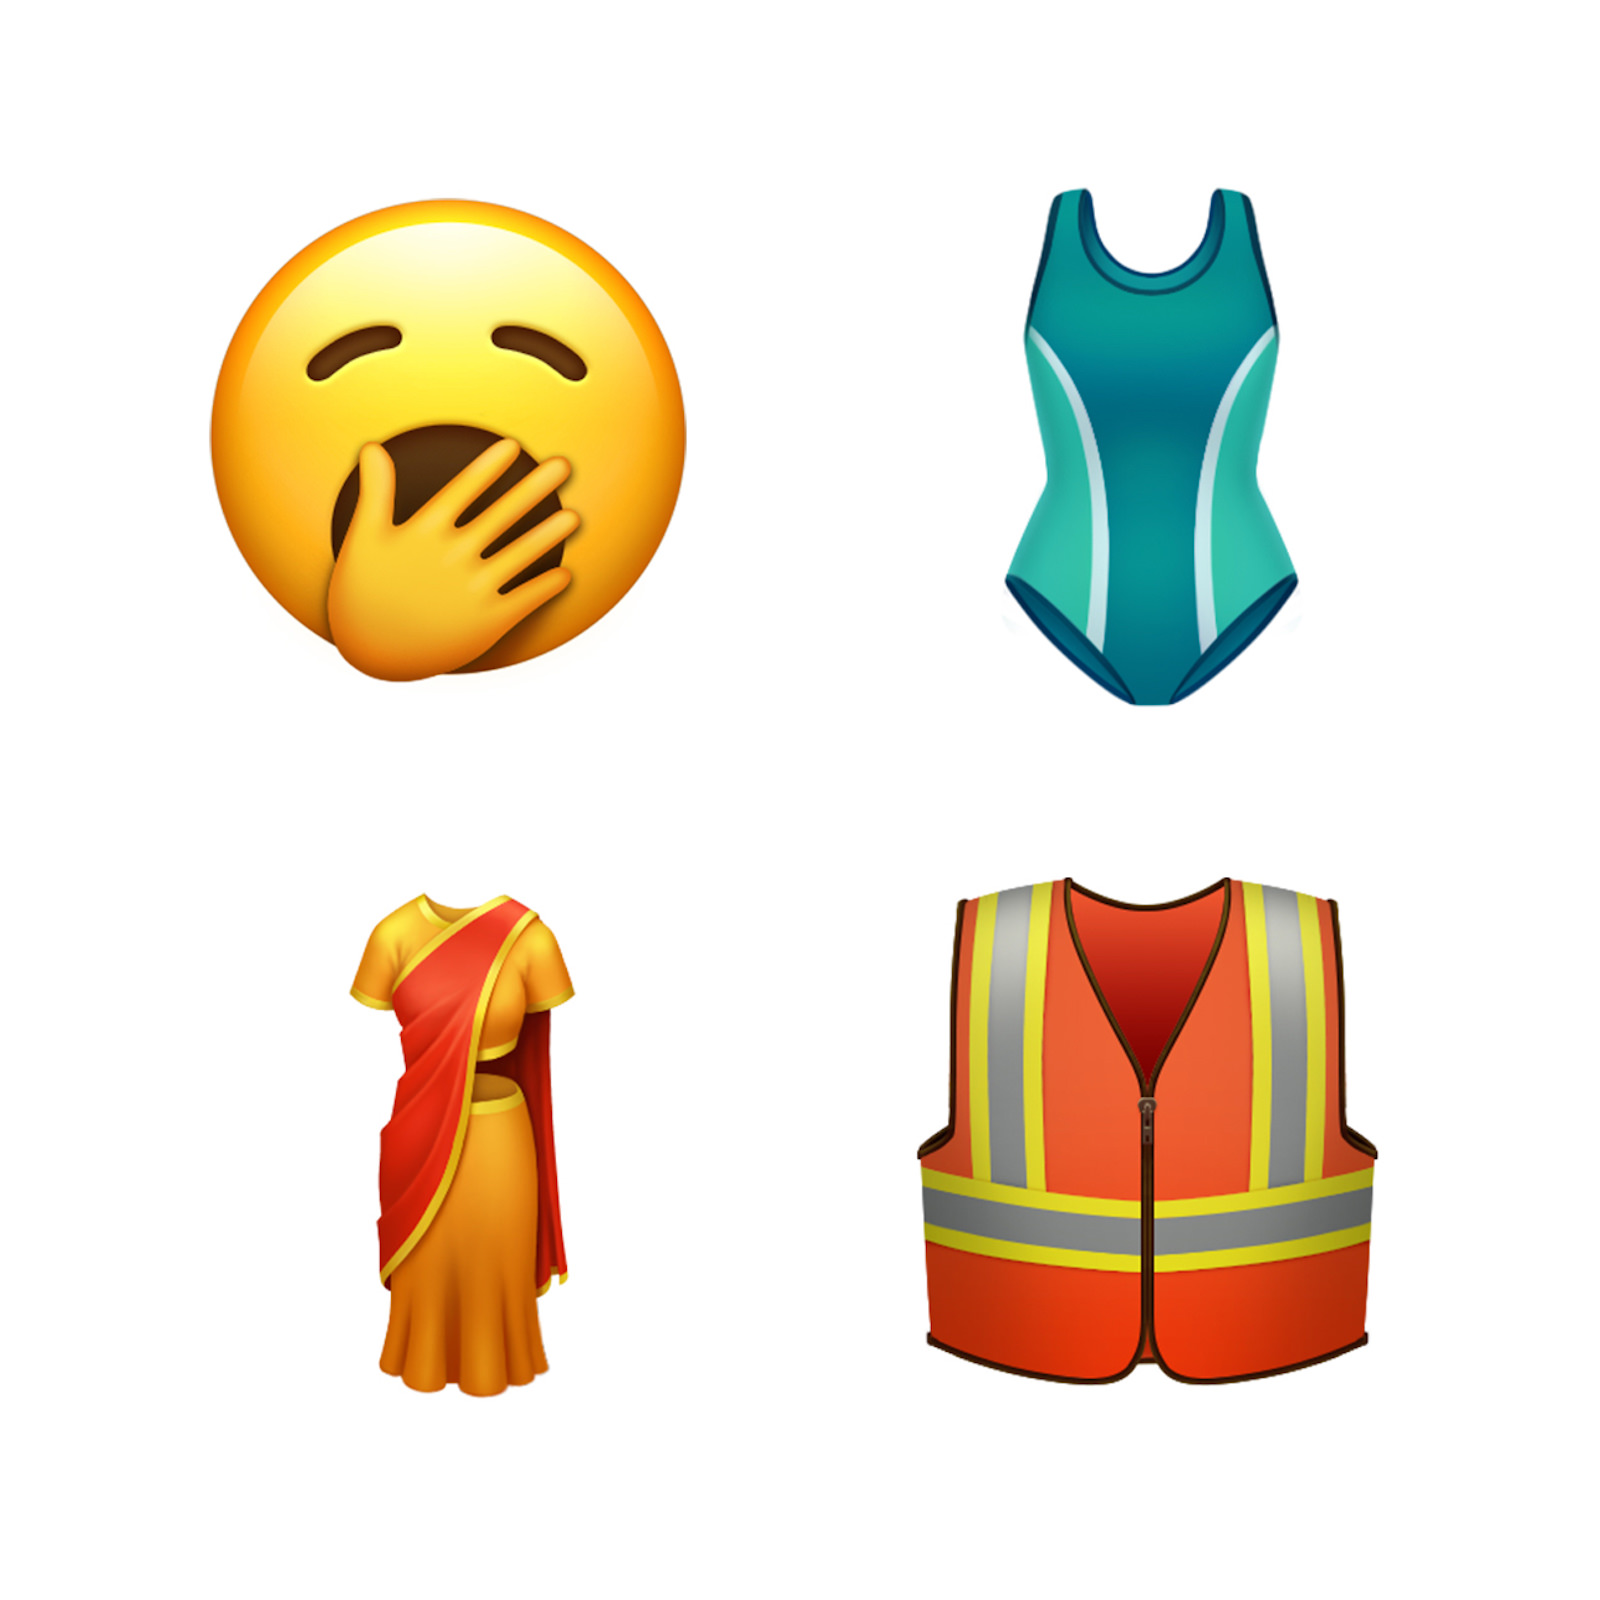 New emoji coming this fall